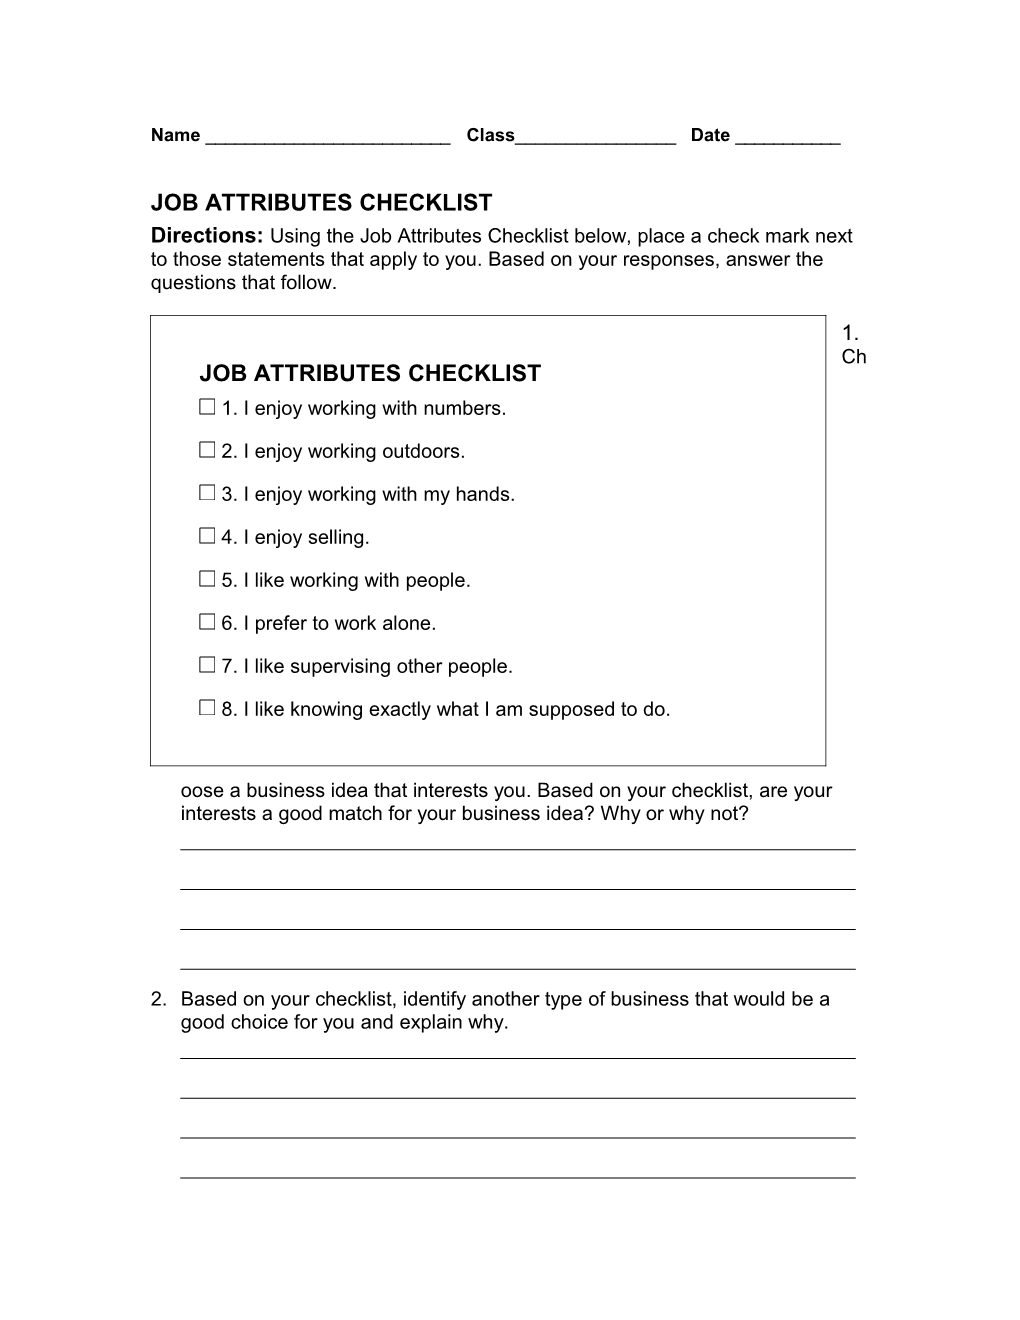 Job Attributes Checklist